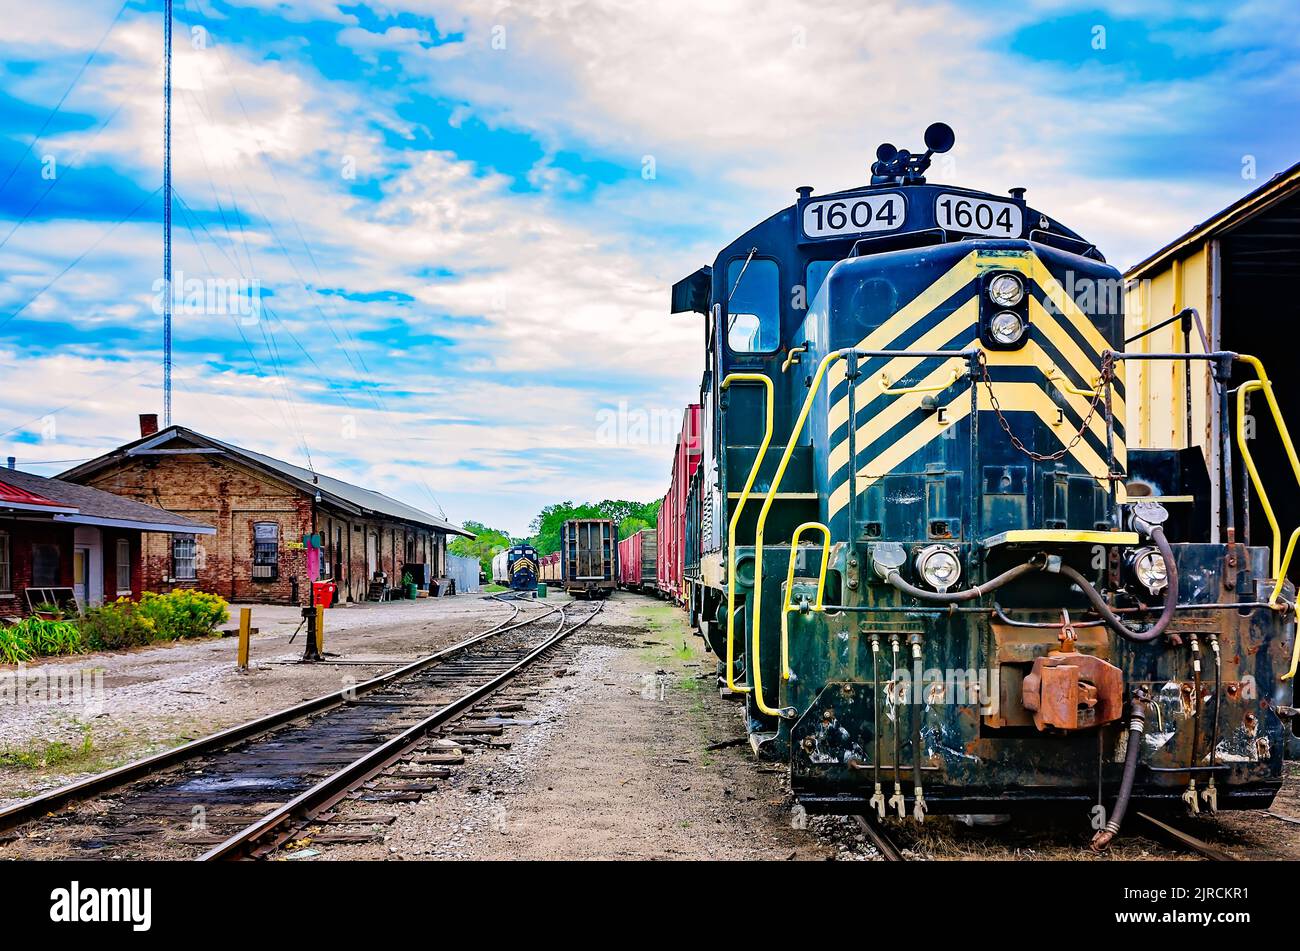 Engine 1604 se trouve dans le Mississippi Central Railroad yard au Holly Springs train Depot, le 24 septembre 2011, à Holly Springs, Mississippi. Banque D'Images